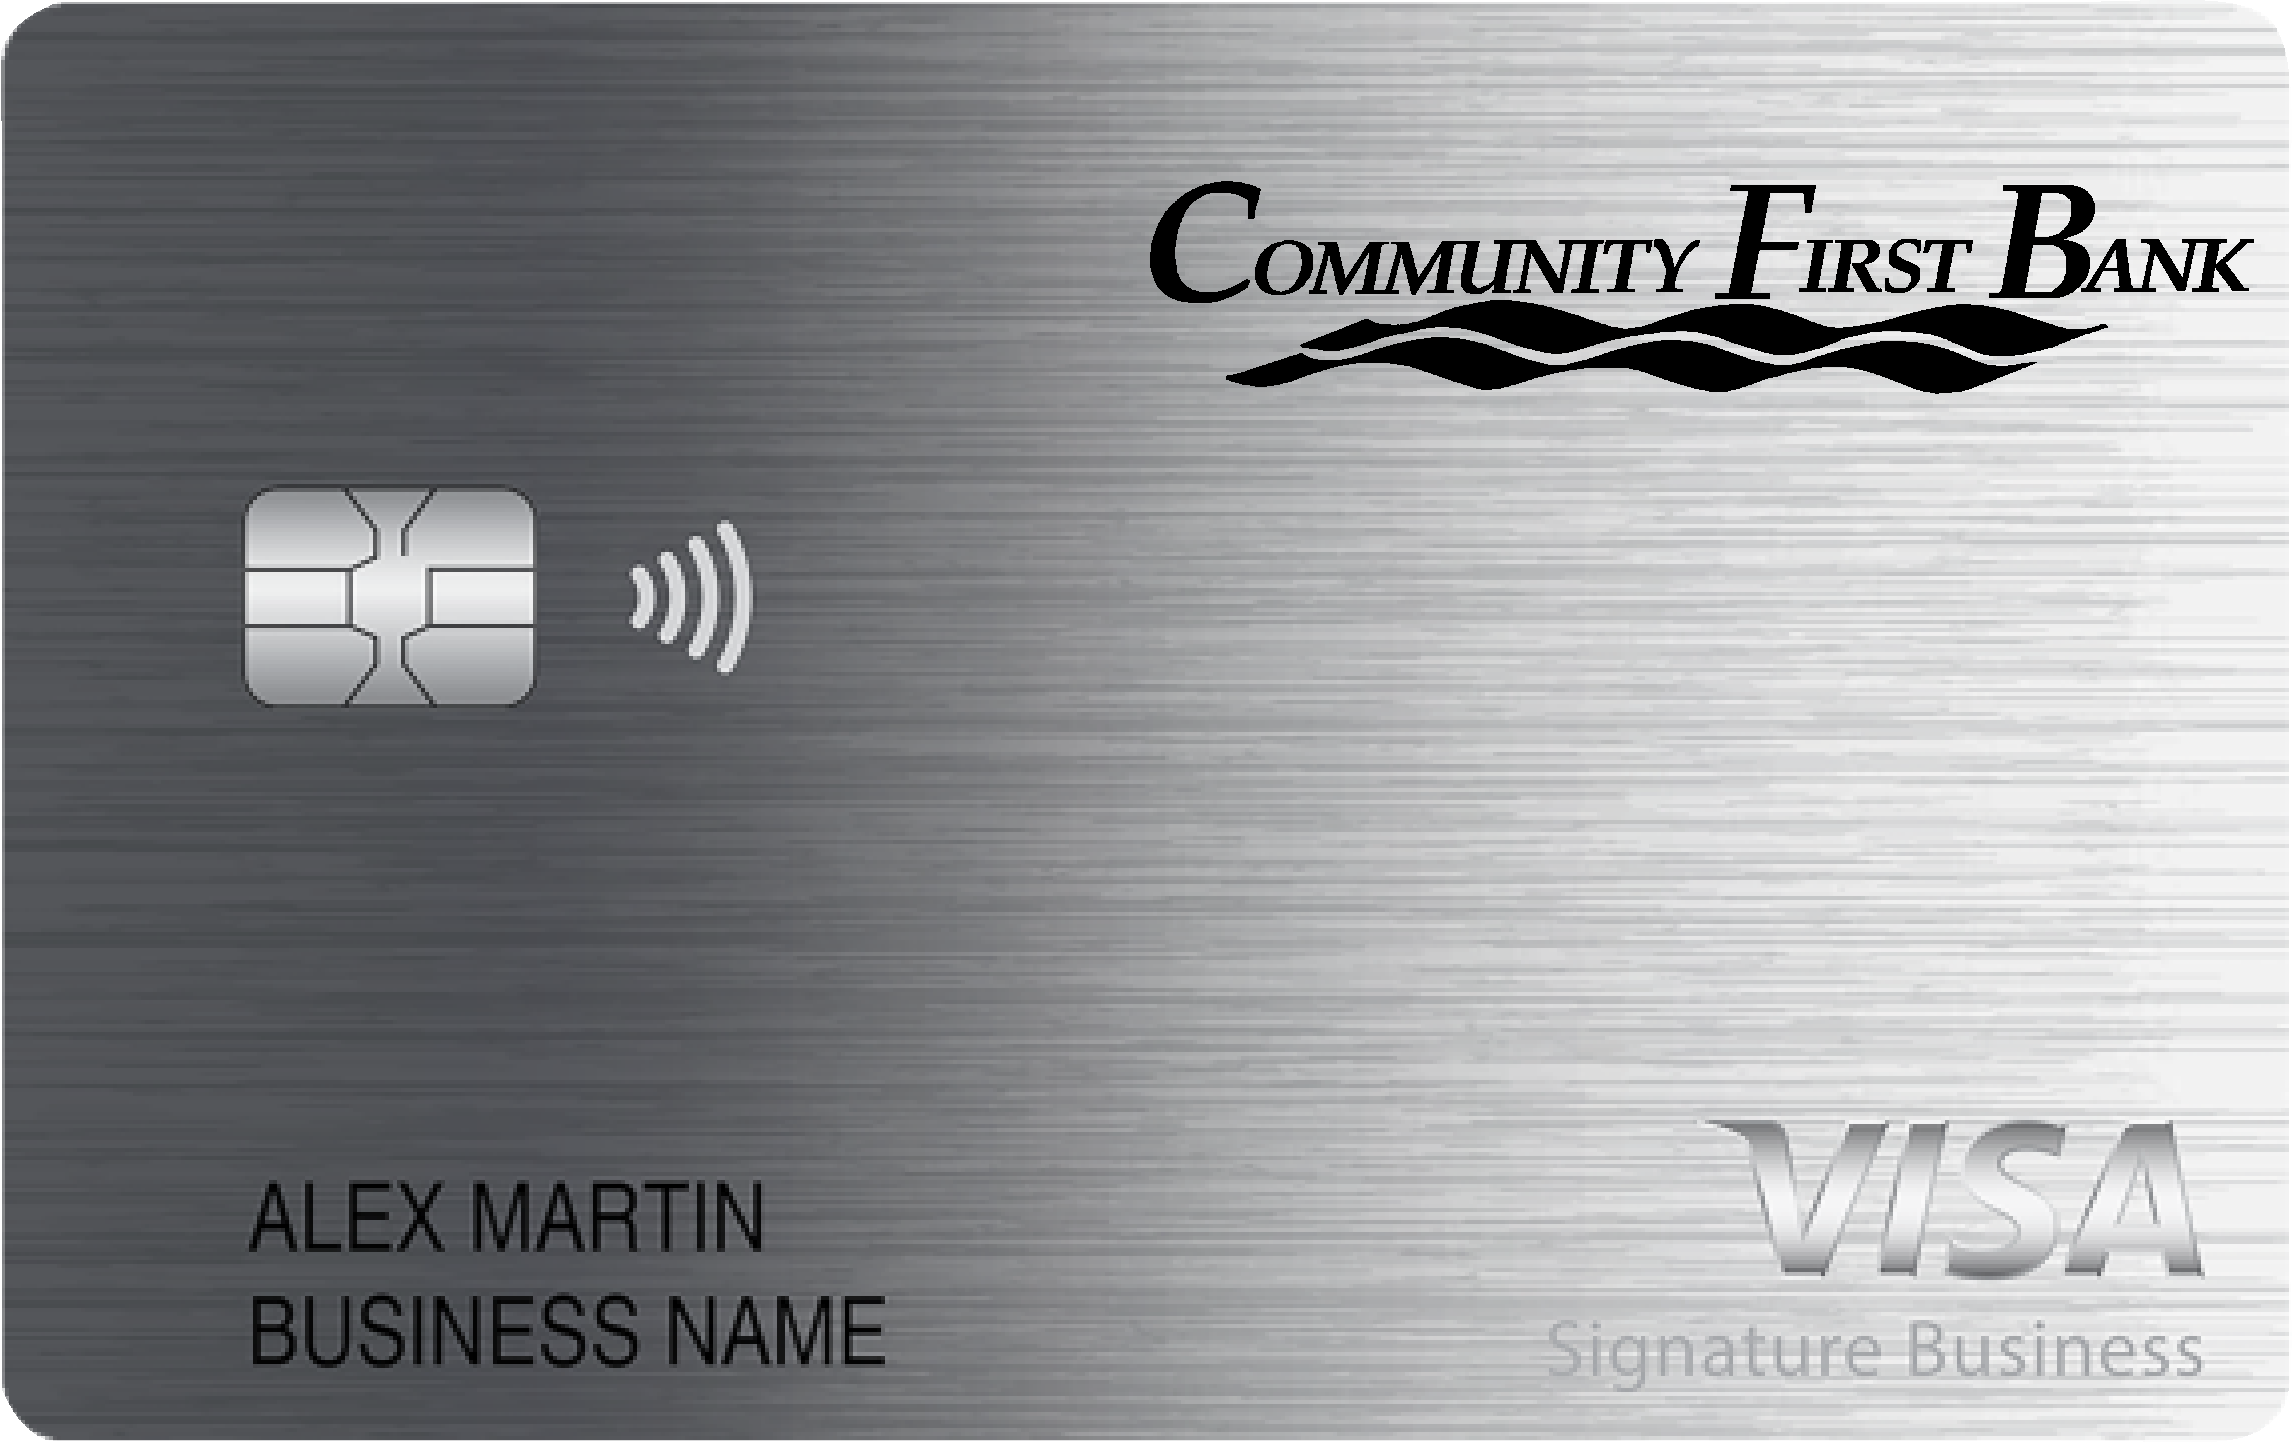 Community First Bank Smart Business Rewards Card